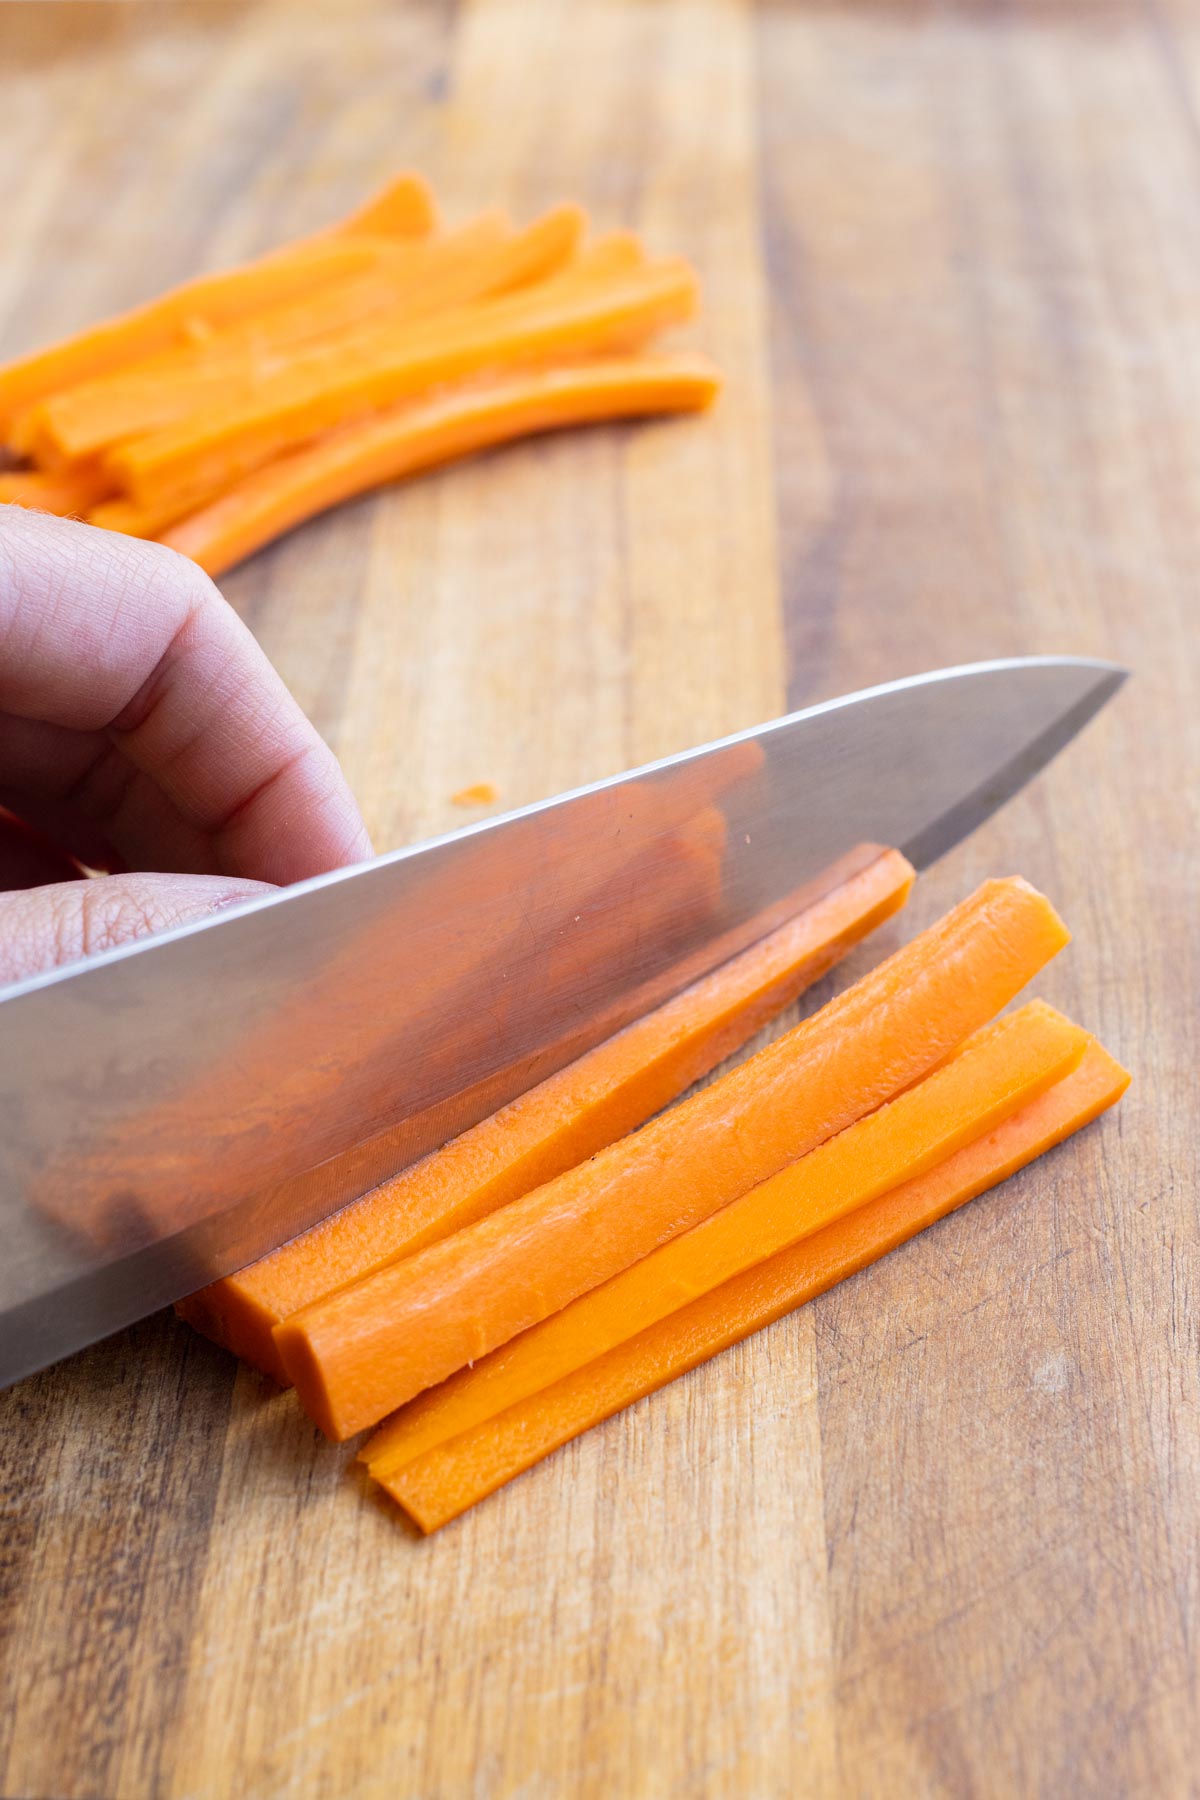 A sharp knife slices a carrot into sticks.